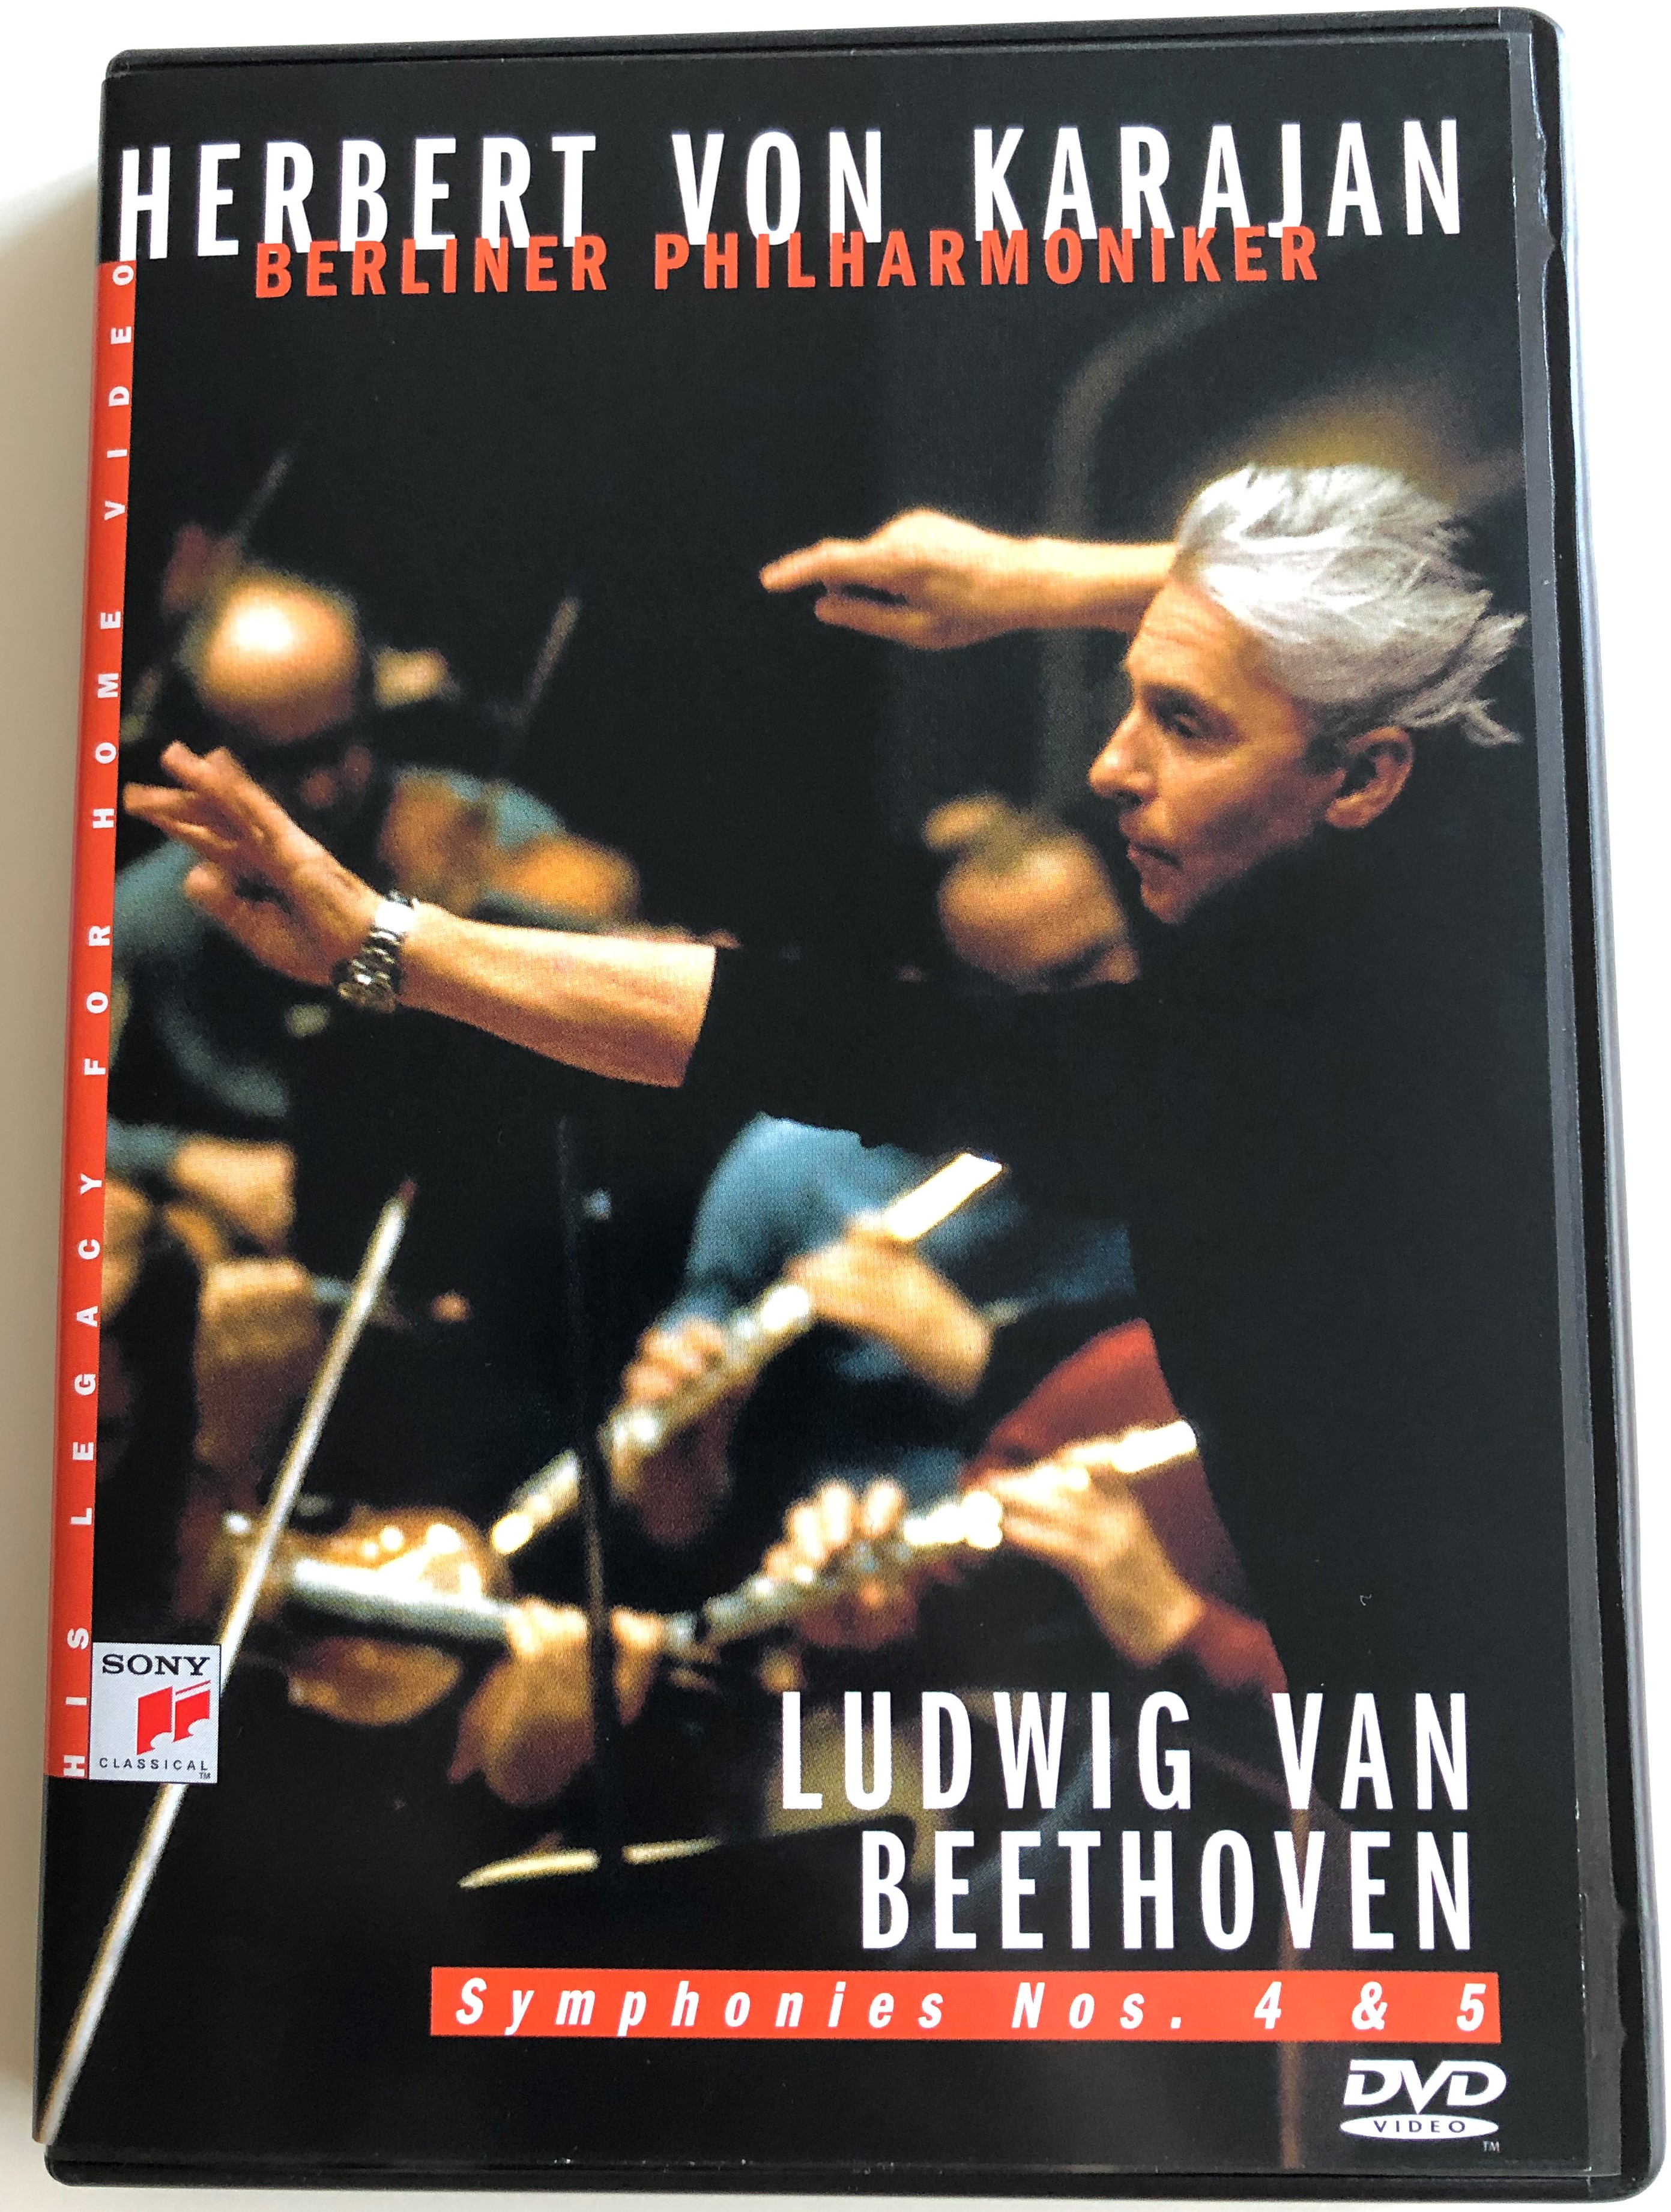 Herbert von Karajan DVD 1983 1.JPG